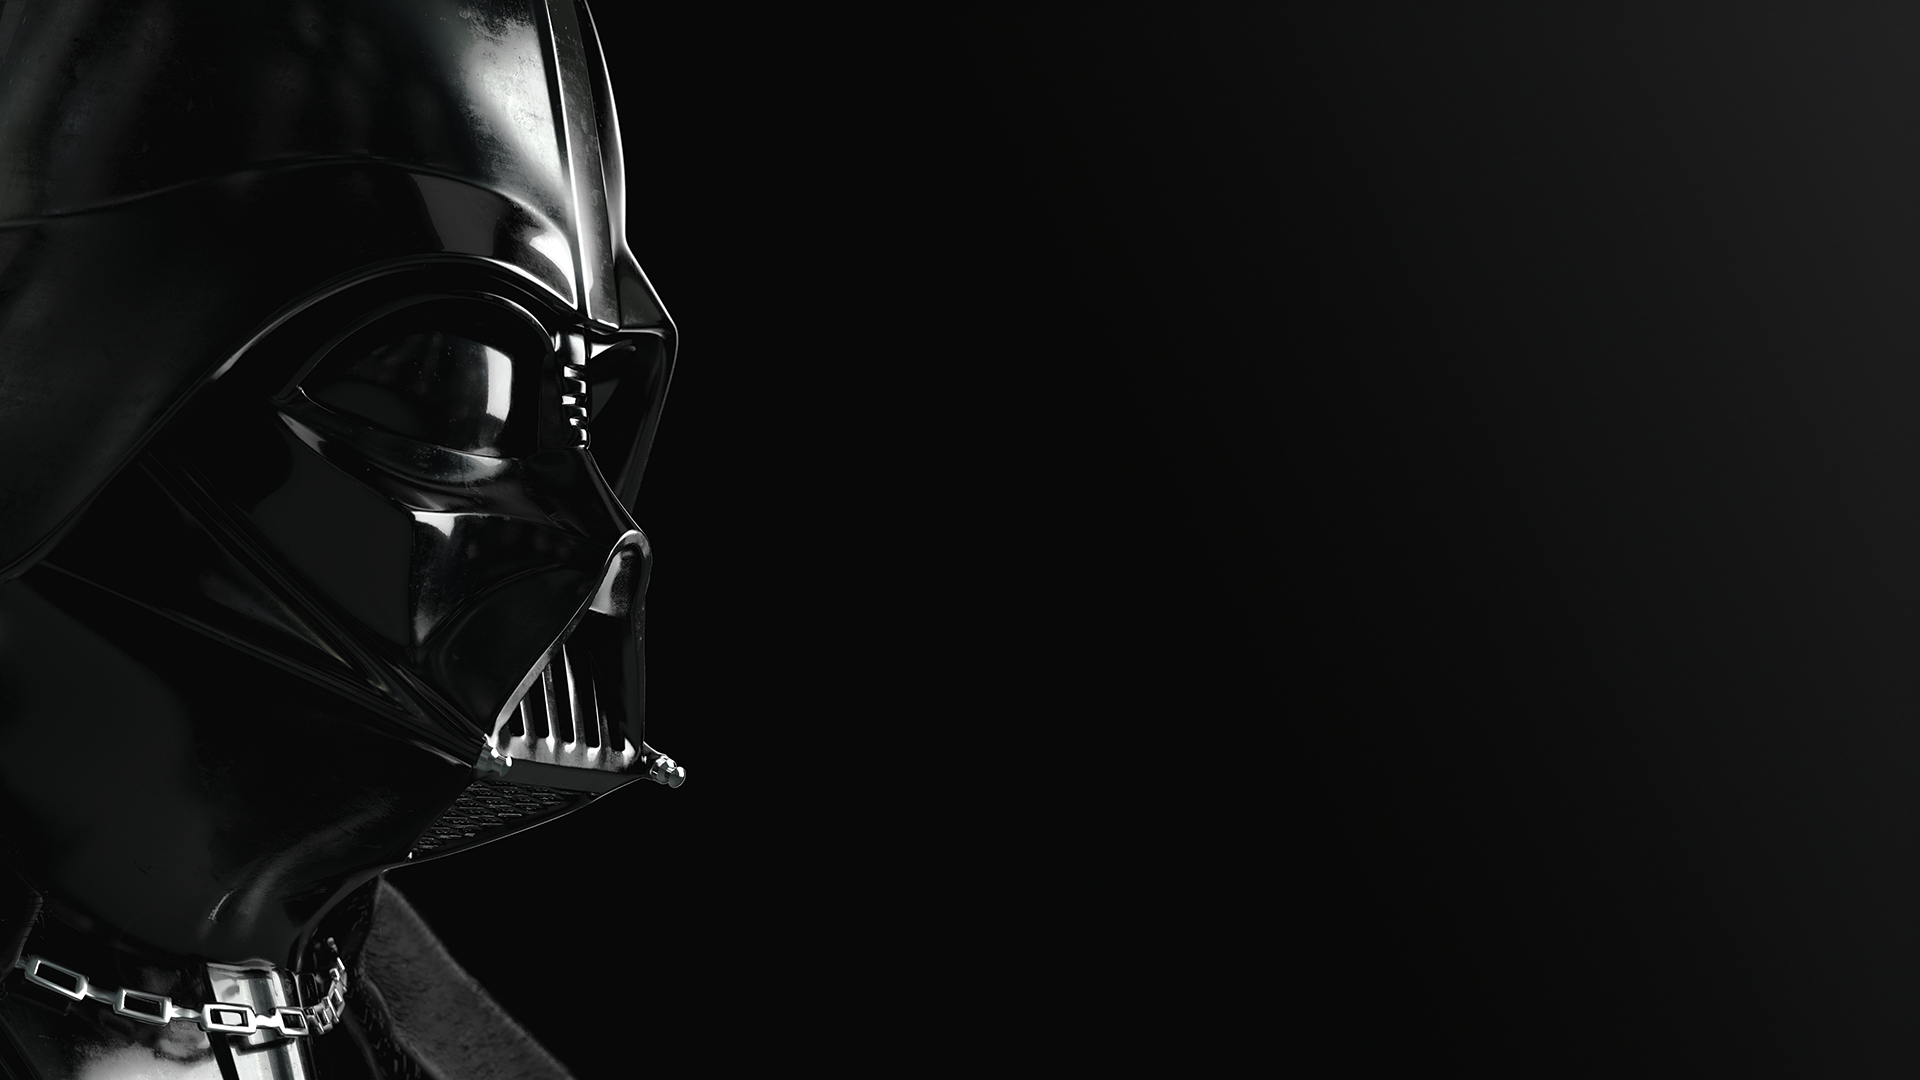 Darth Vader Wallpaper Top HDq Image